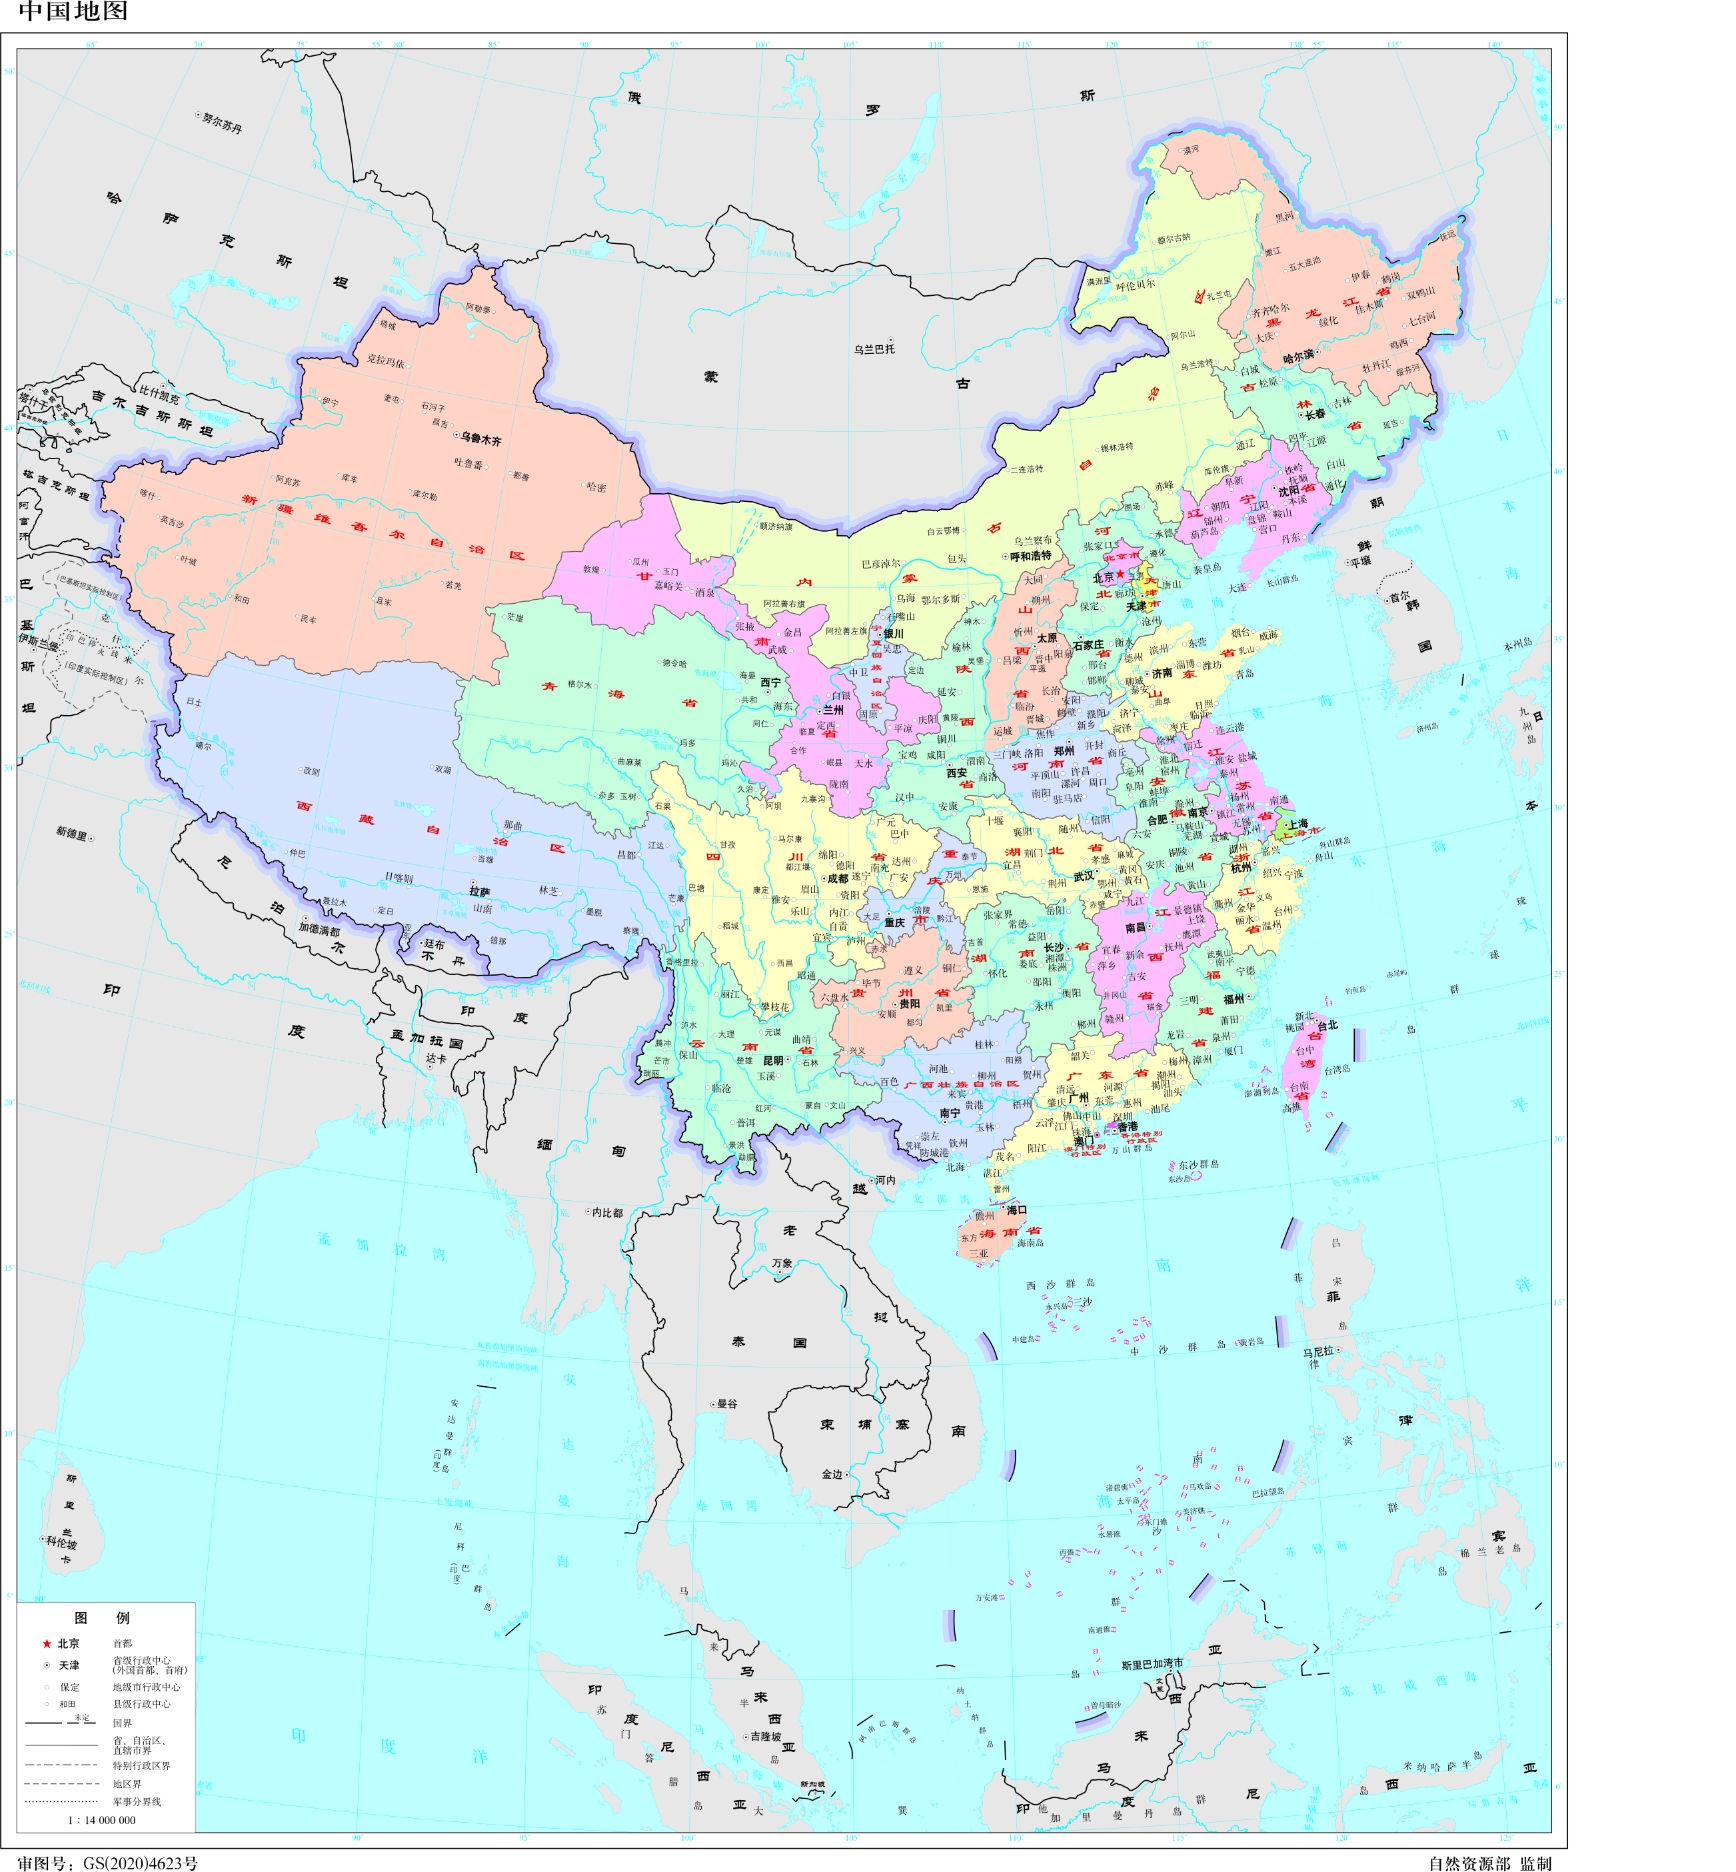 asml连一张正确的中国地图都找不到